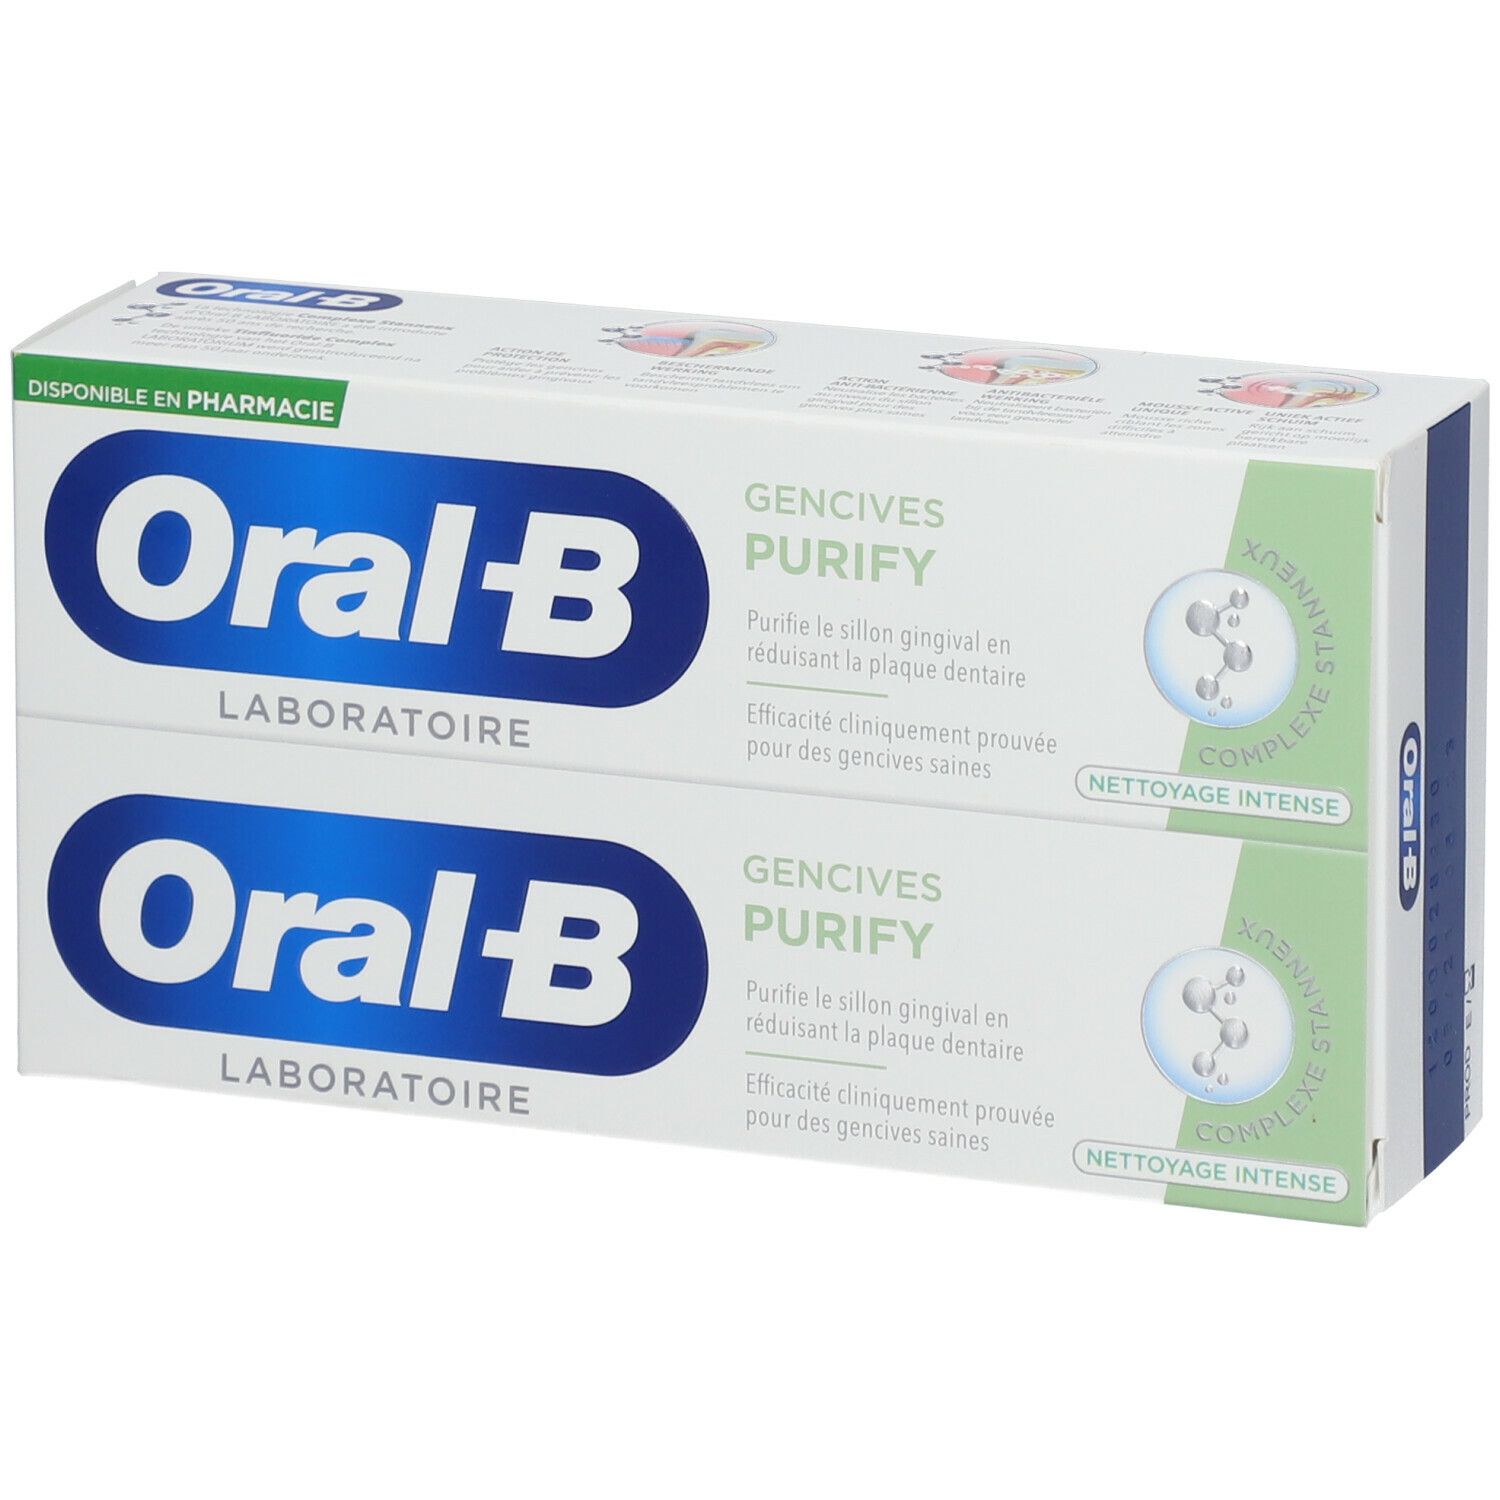 Oral-B Laboratoire Gencives Purify Nettoyage Intense Dentifrice